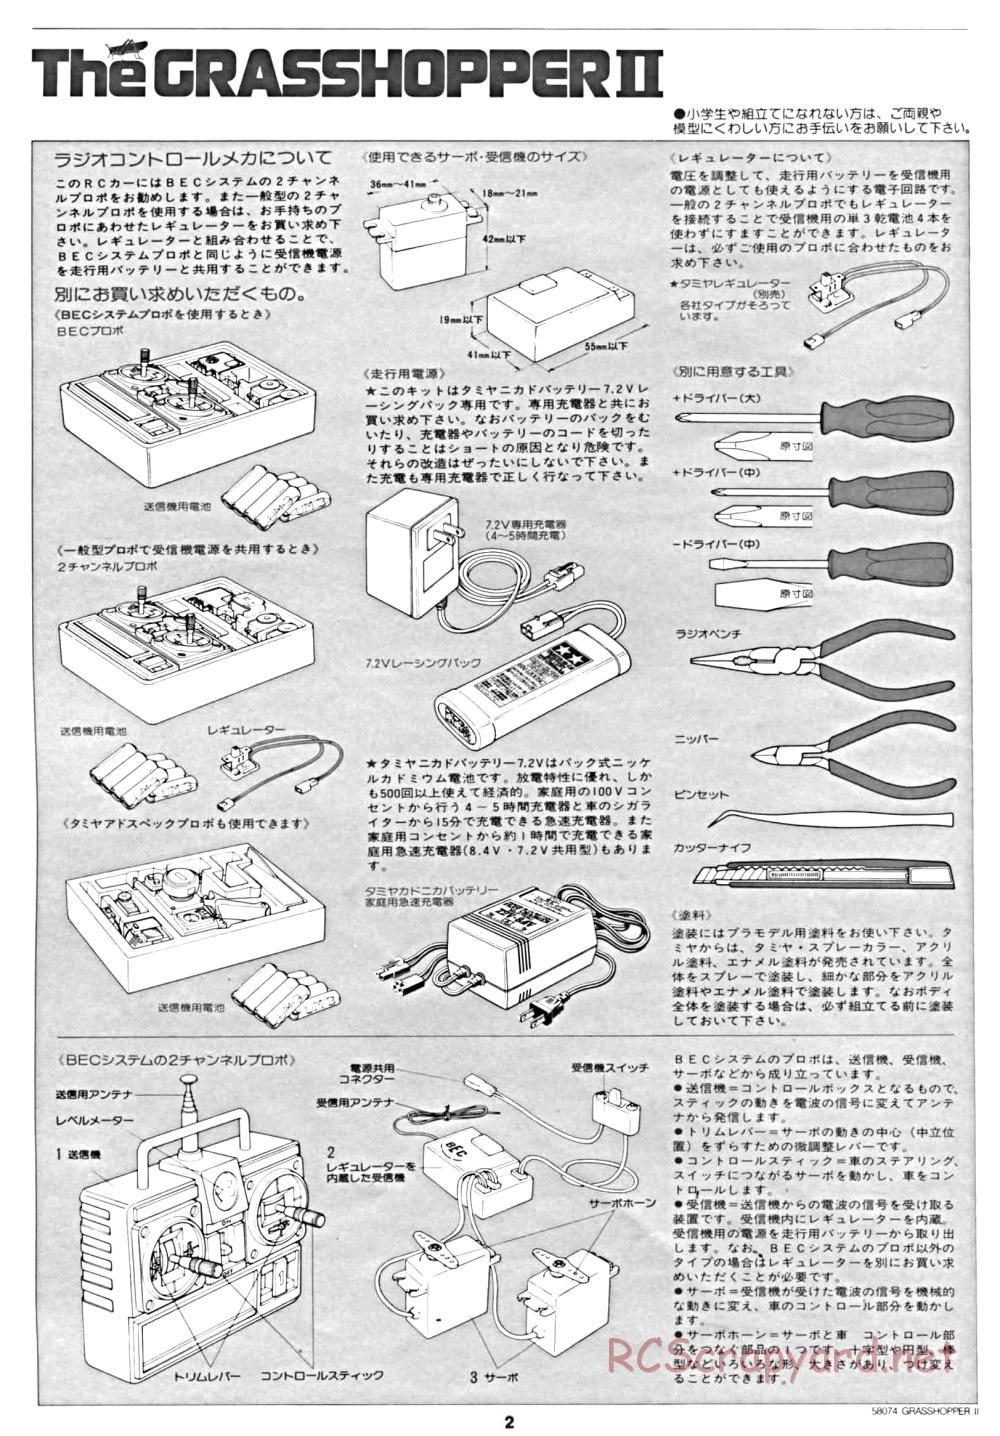 Tamiya - The Grasshopper II - 58074 - Manual - Page 2